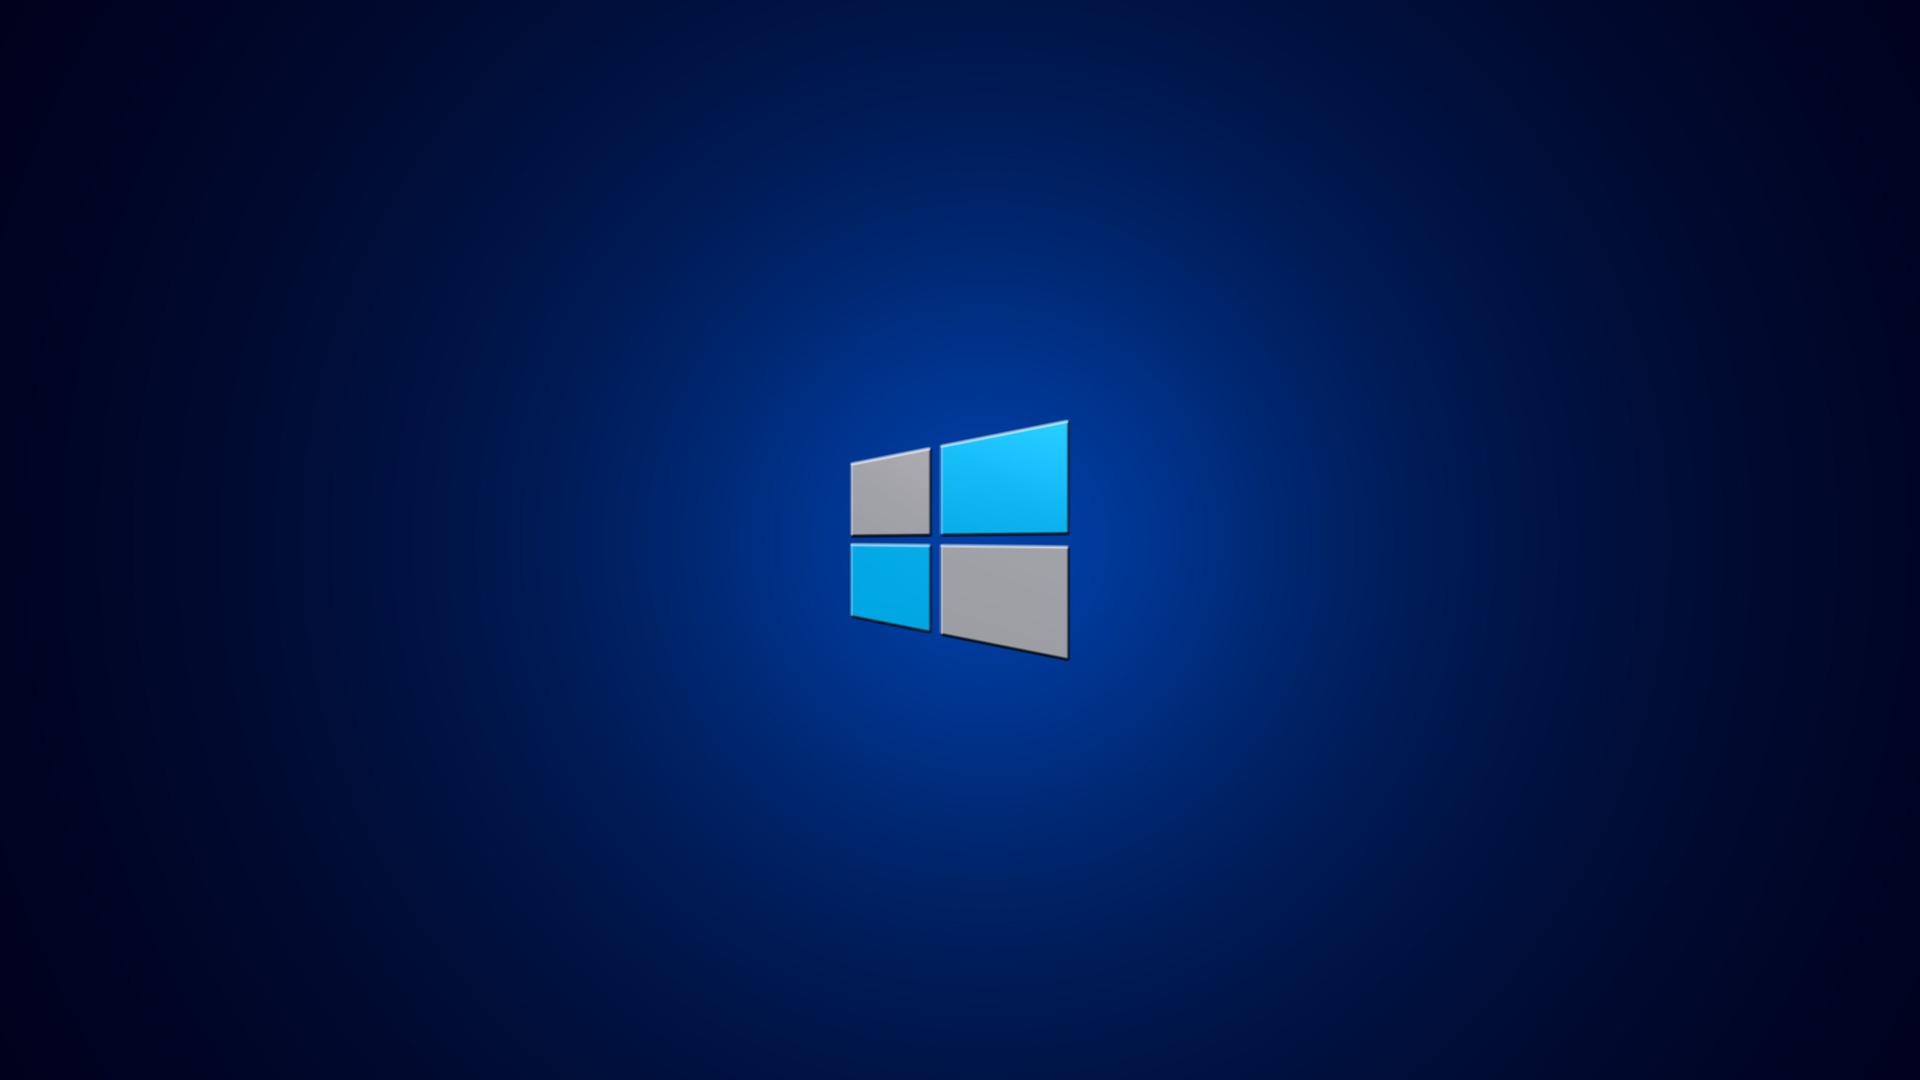 Official Windows 8 Wallpaper High Definition - Uncalke.com